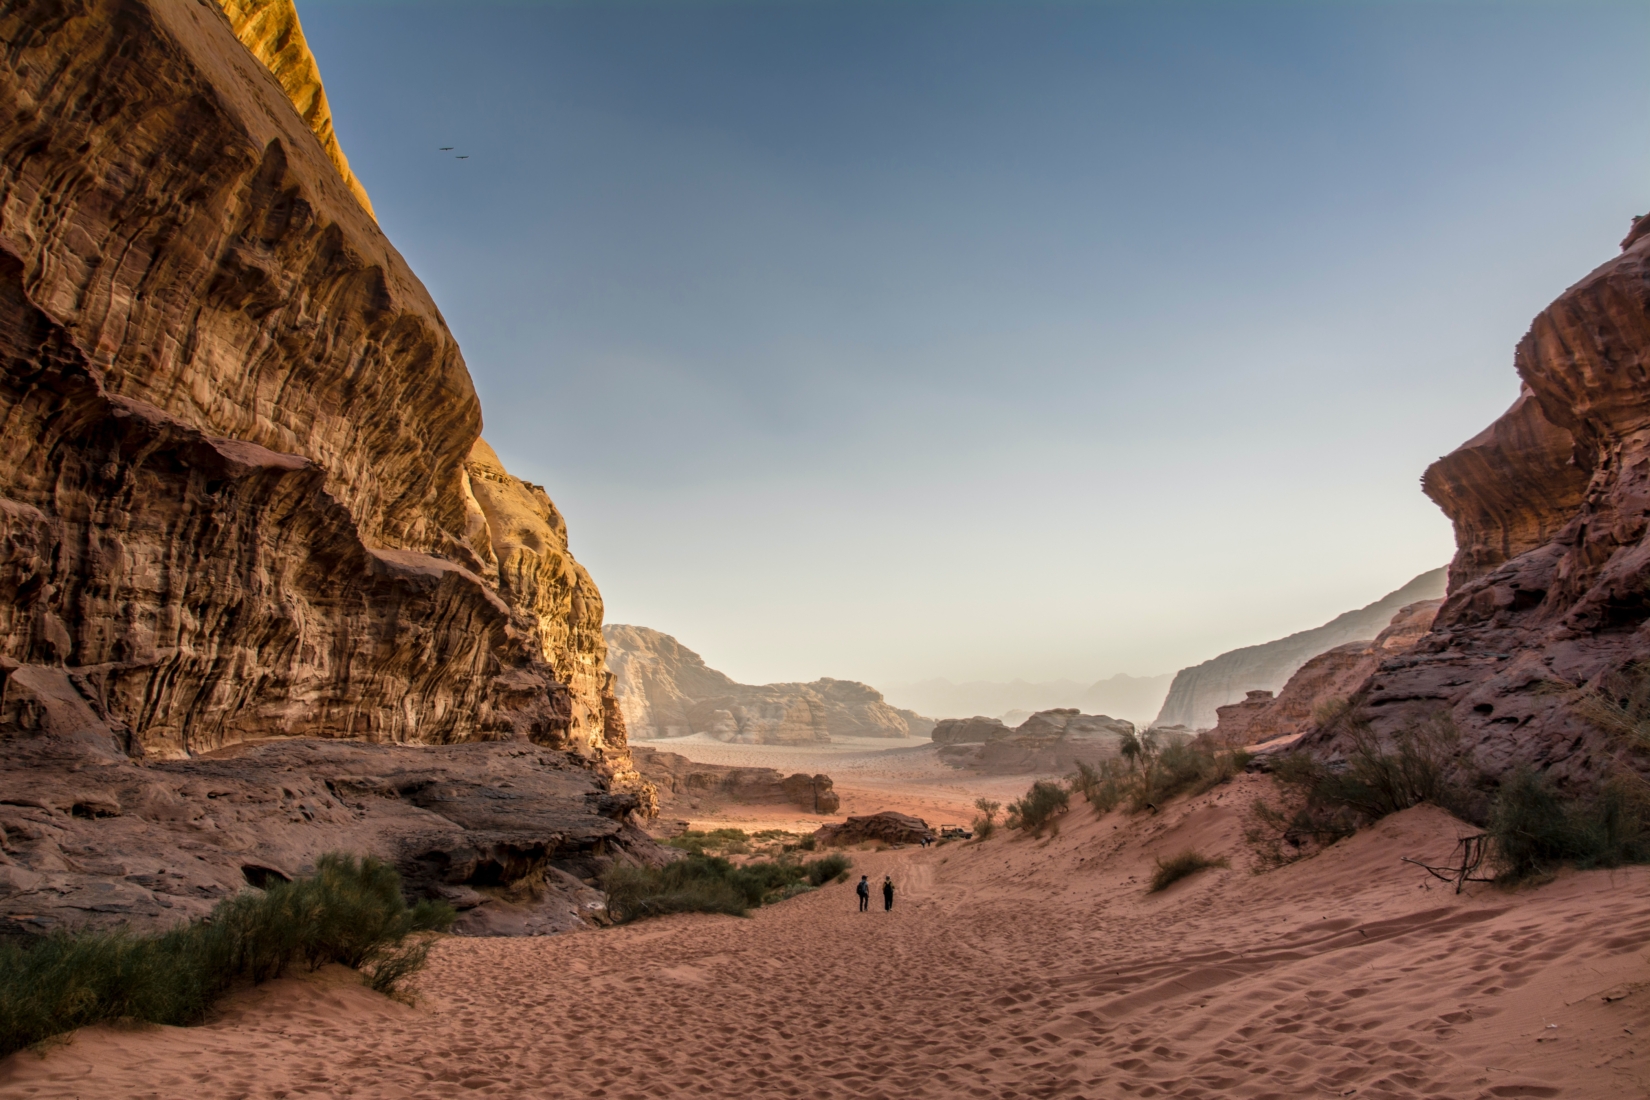 Sand dunes and rocky desert mountains in the Wadi Rum Desert